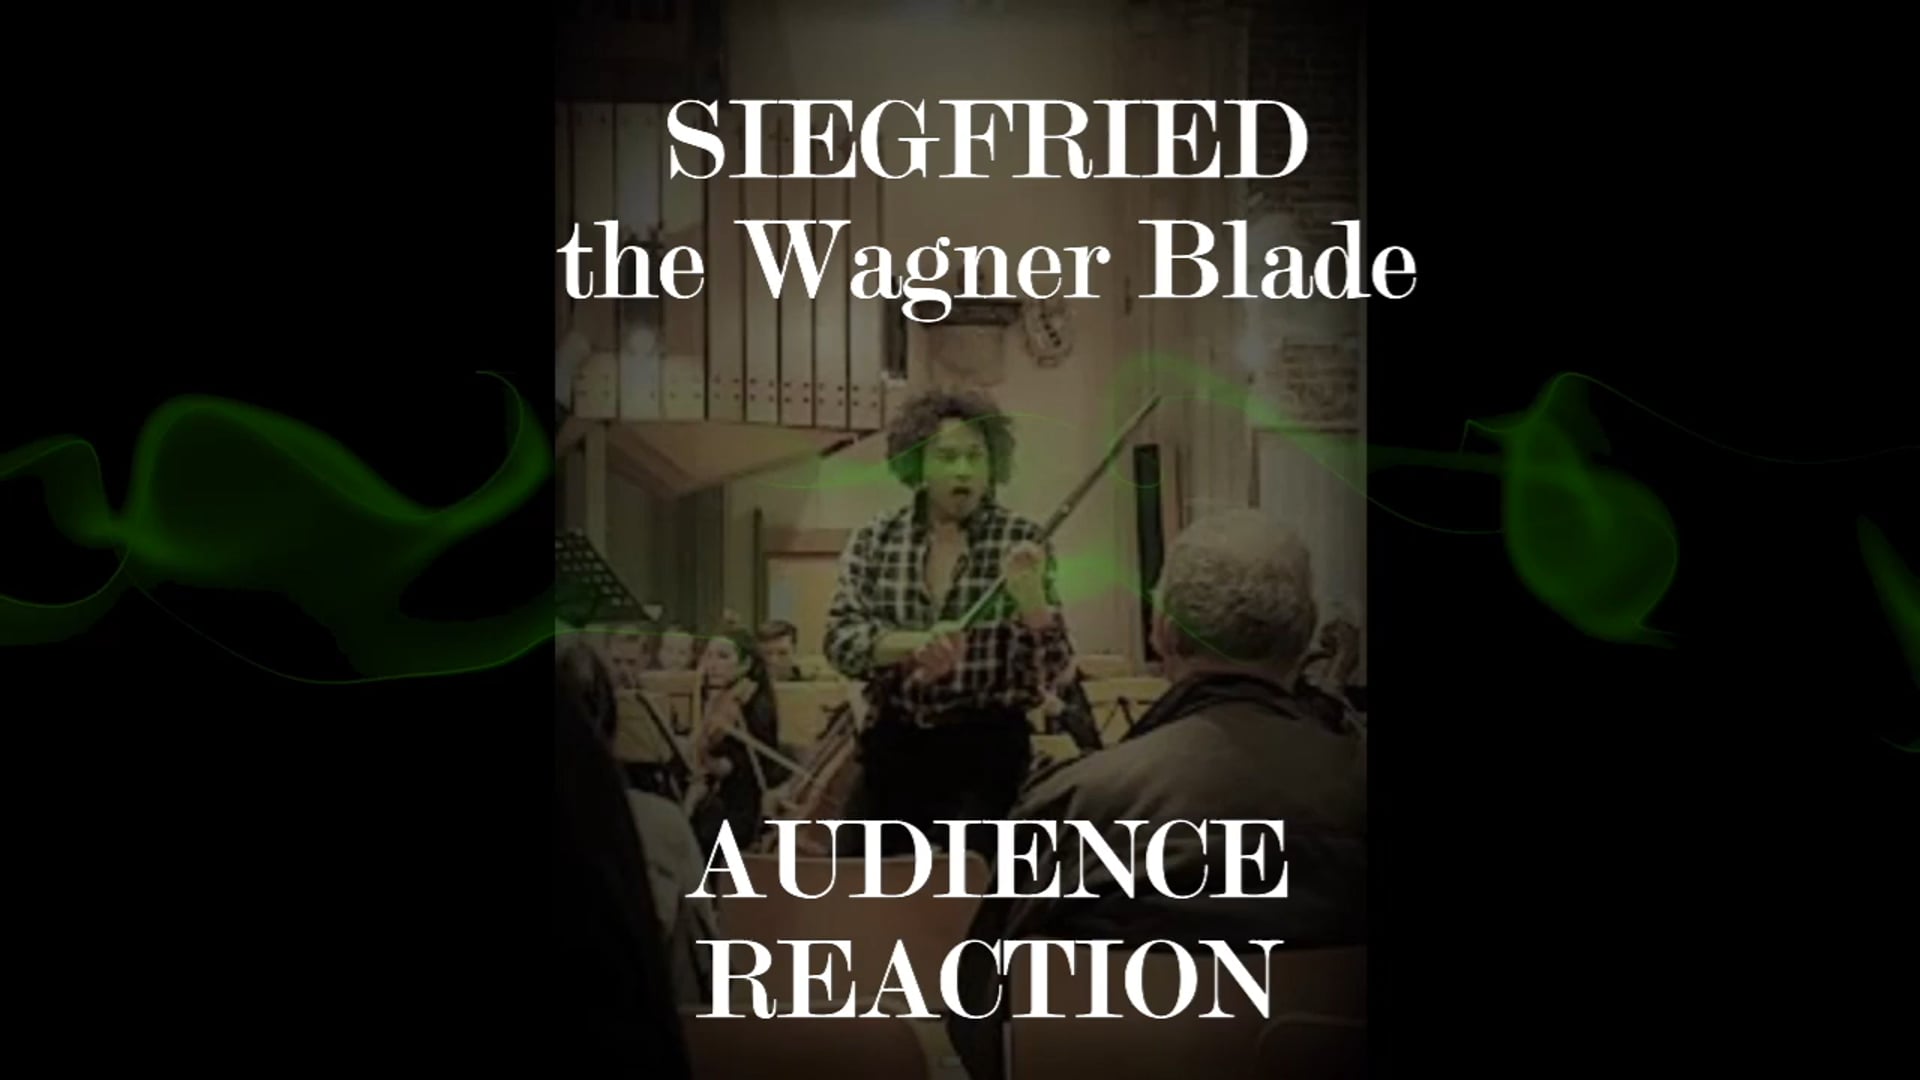 Siegfried: An audience resounds